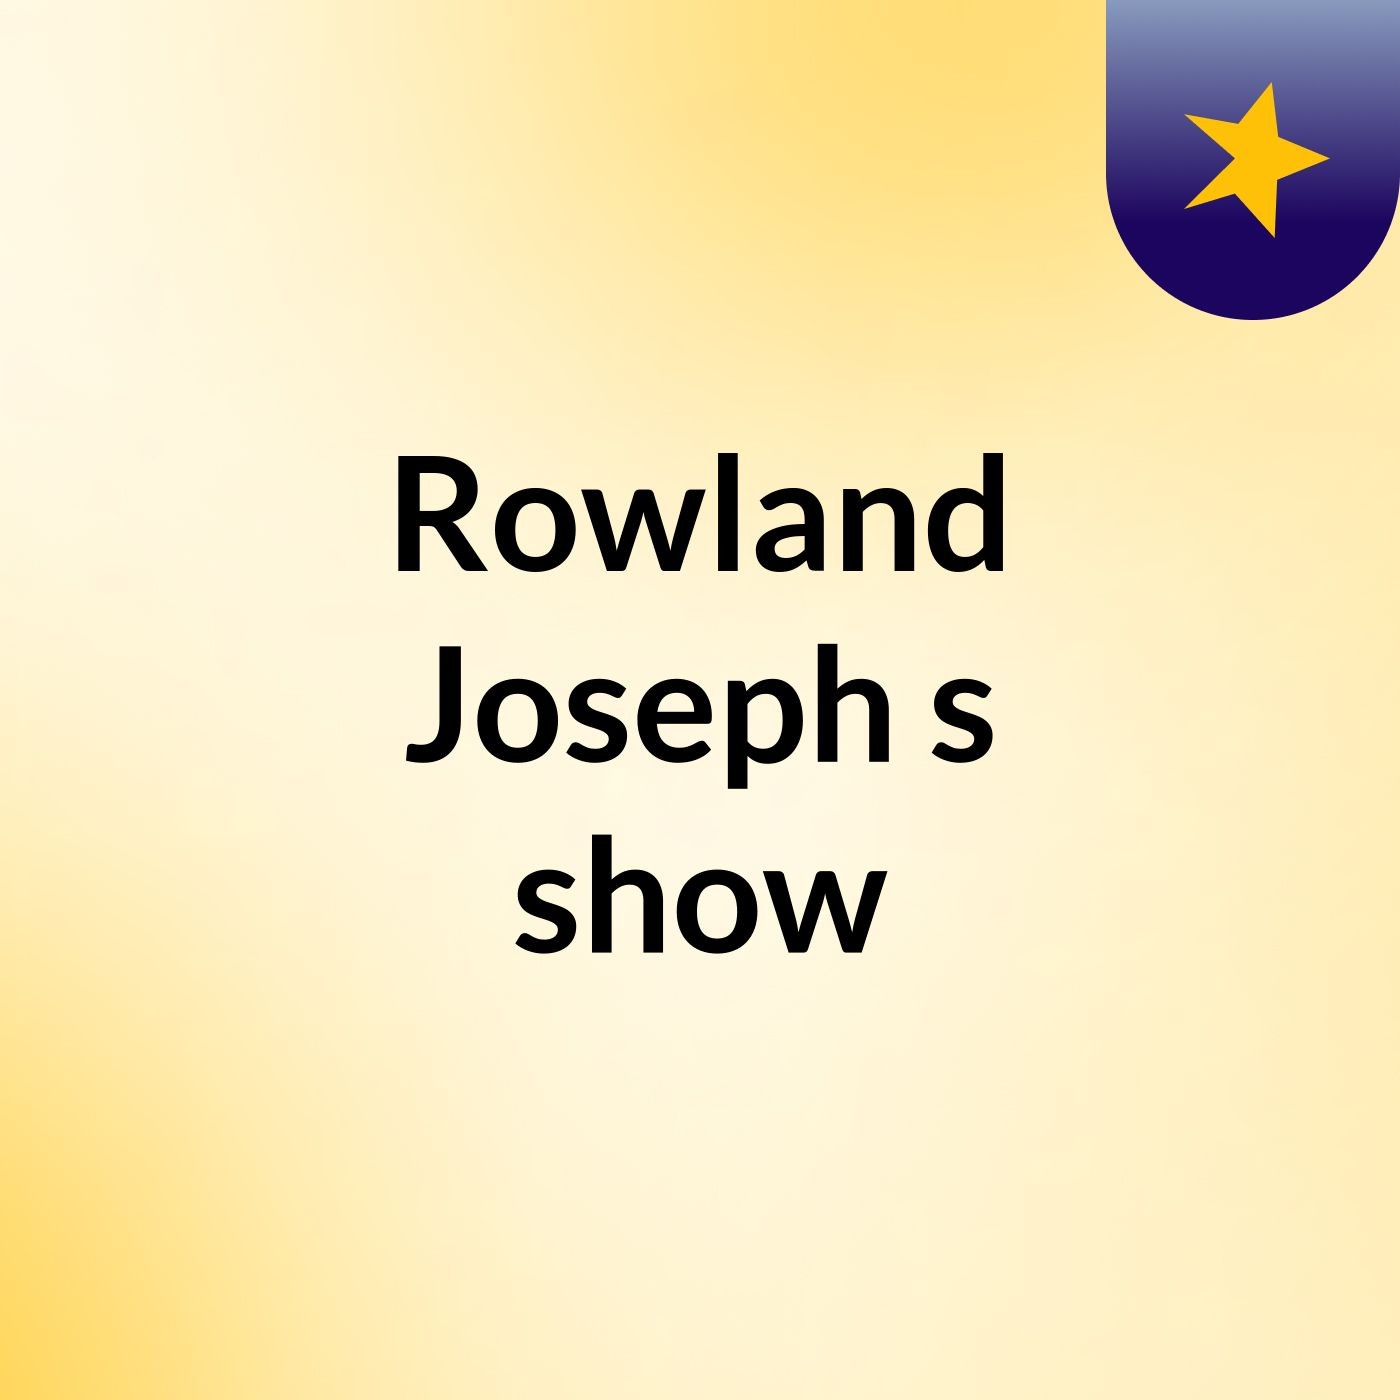 Rowland Joseph's show